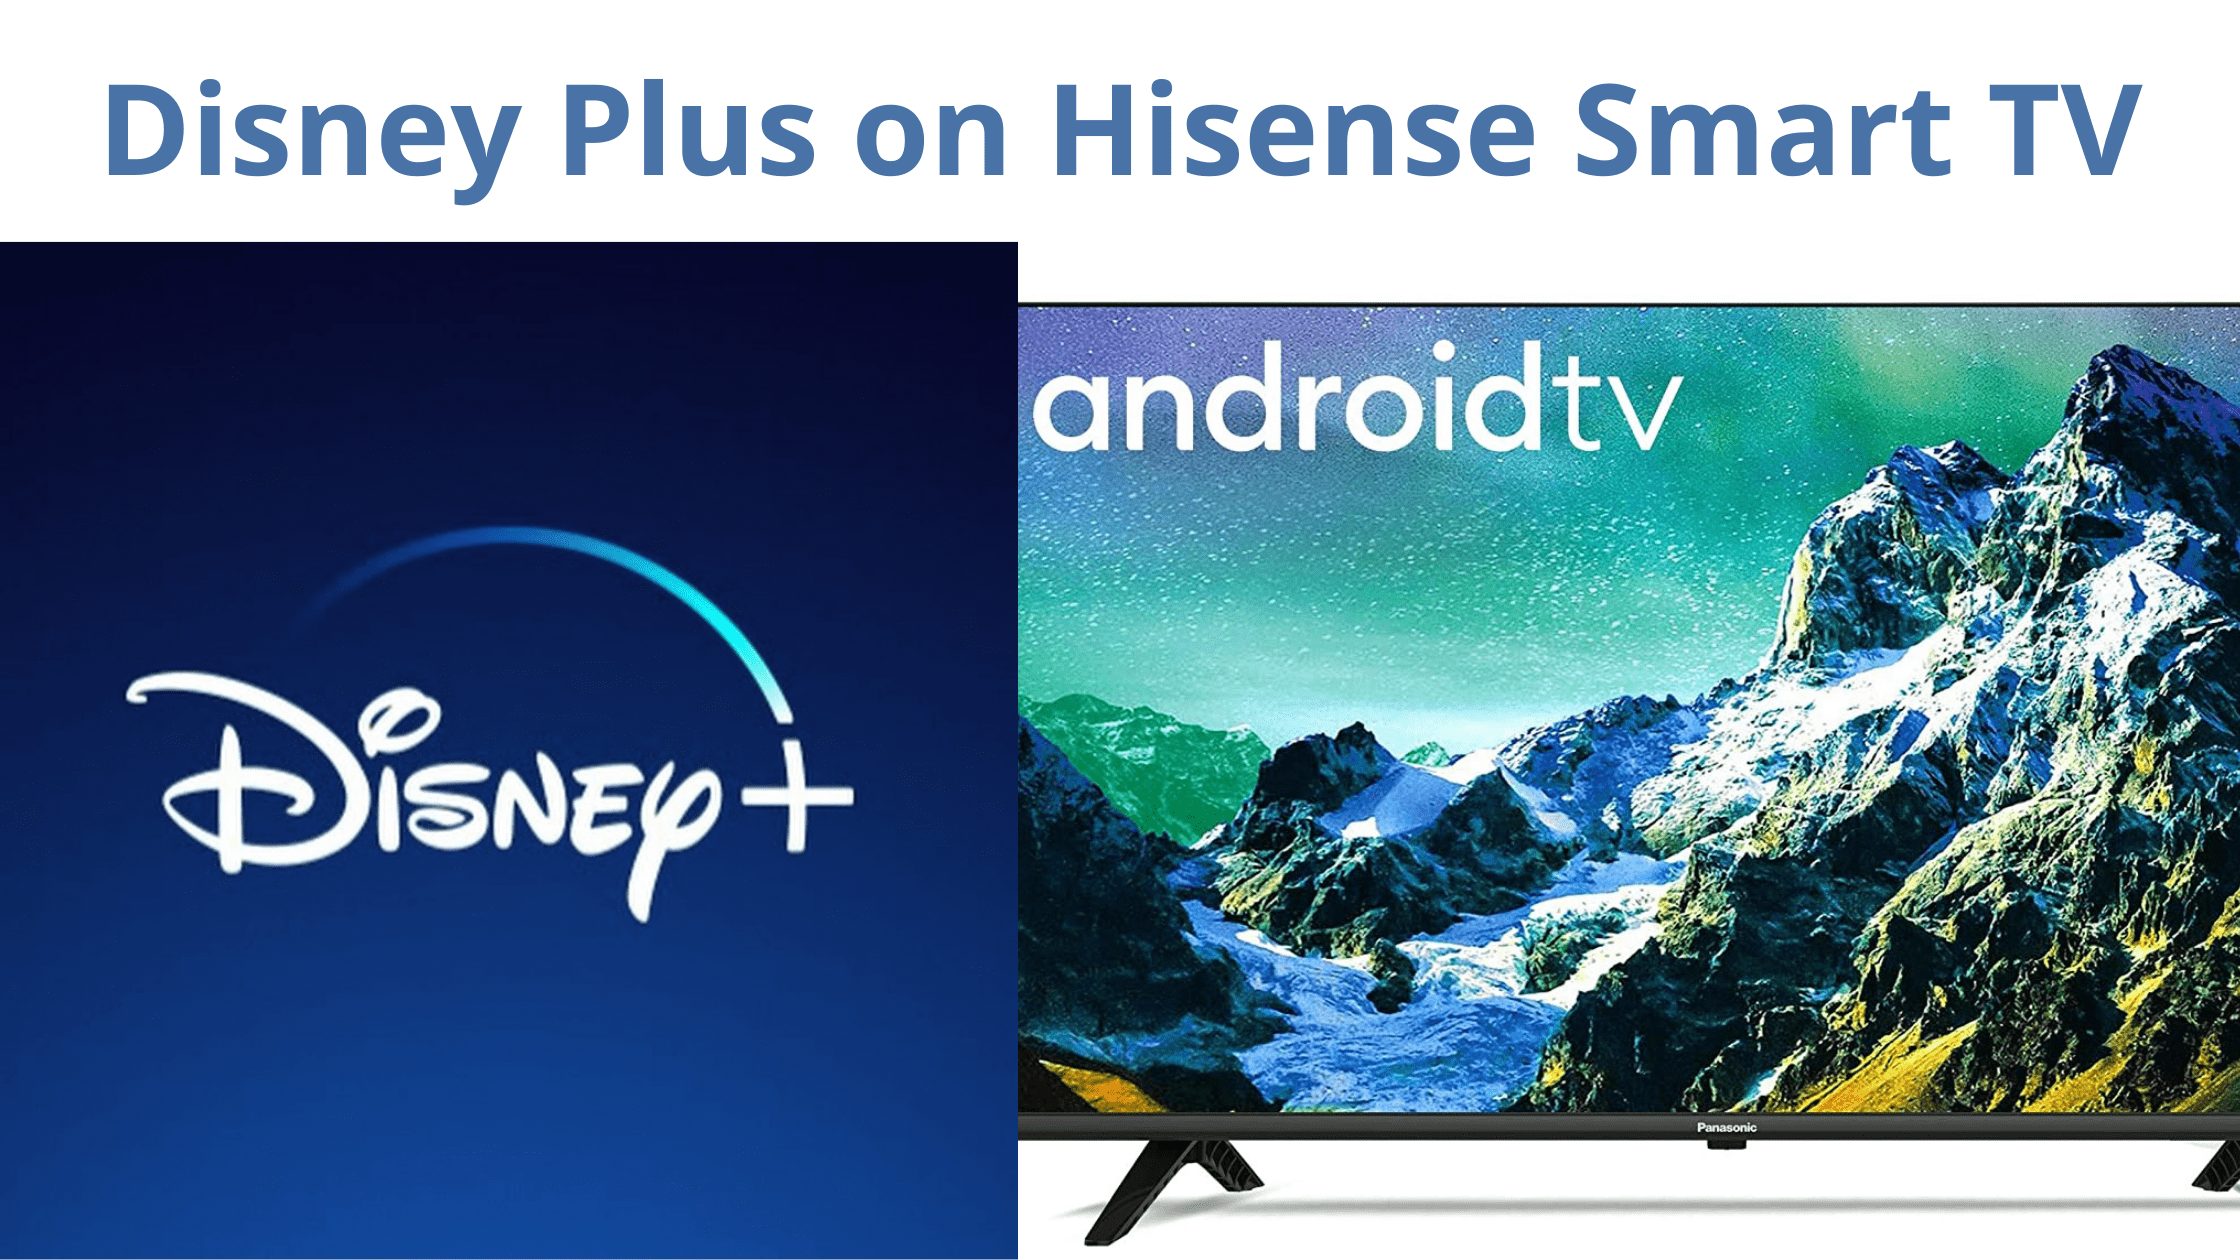 Disney Plus on Hisense Smart TV